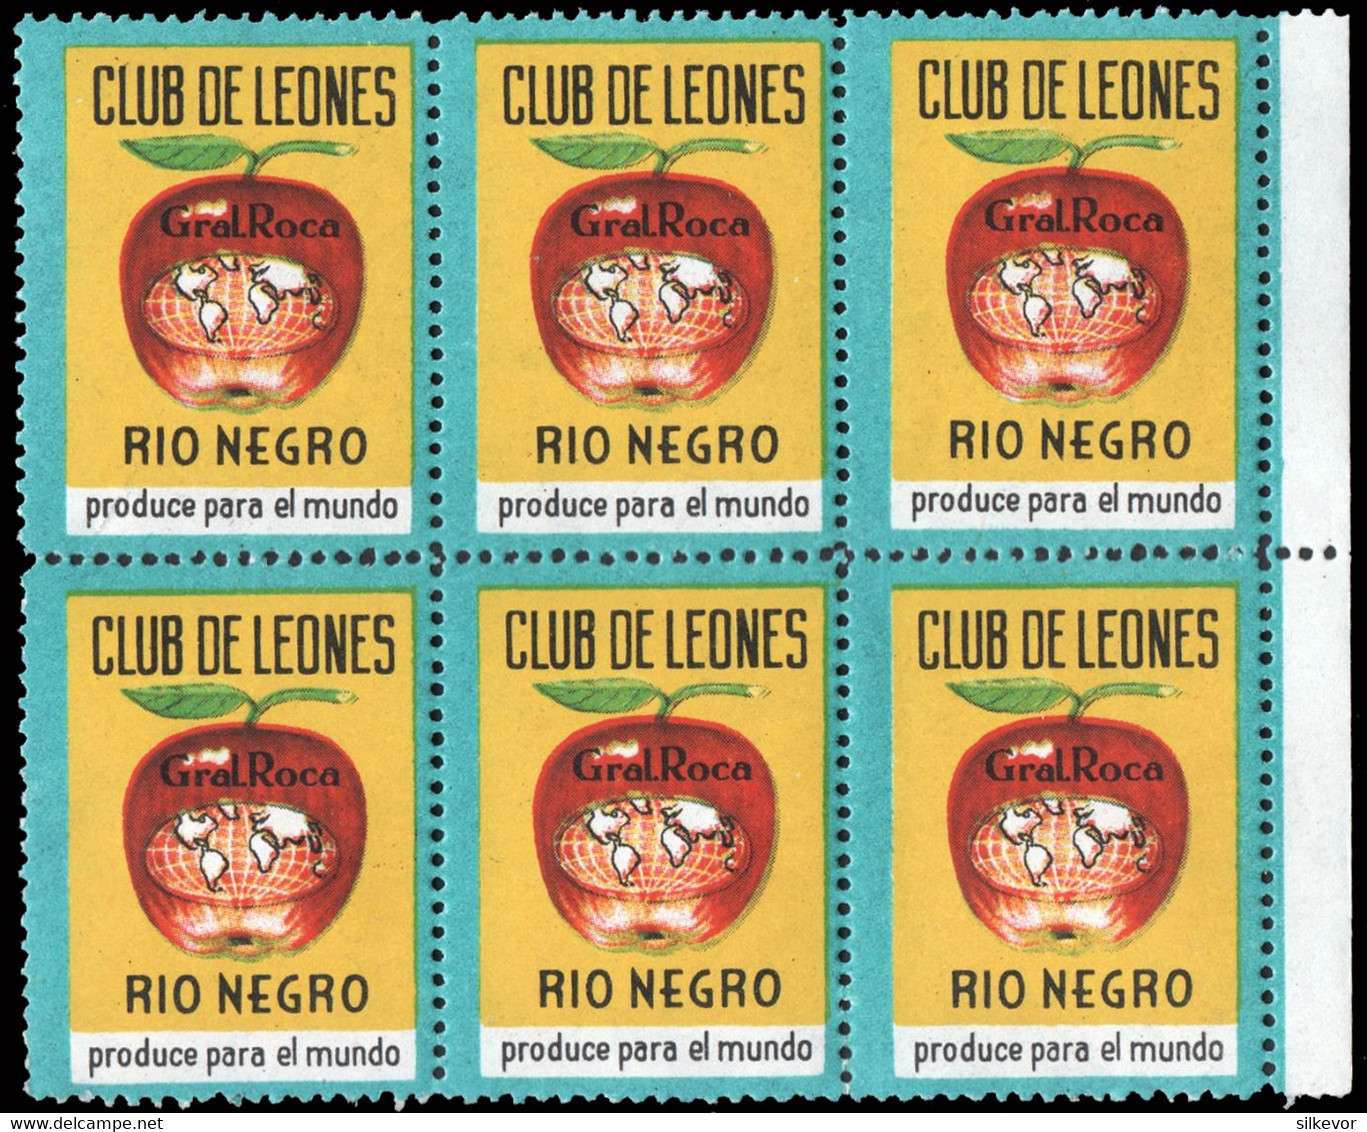 LIONS CLUB-STAMPS-ARGENTINA-CINDERELLA ISSUED IN  1964 BY GENERAL ROCA LIONS CLUB( RIO NEGRO PROVINCE) - Viñetas De Franqueo (Frama)